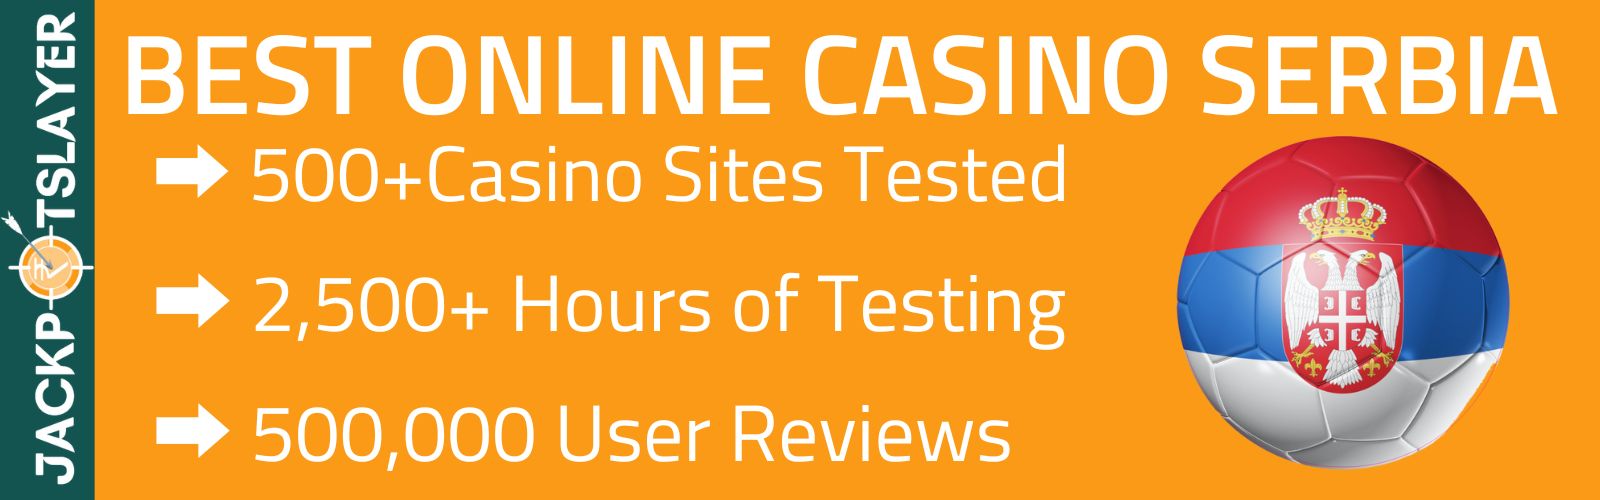 Best Online Casinos Serbia Review